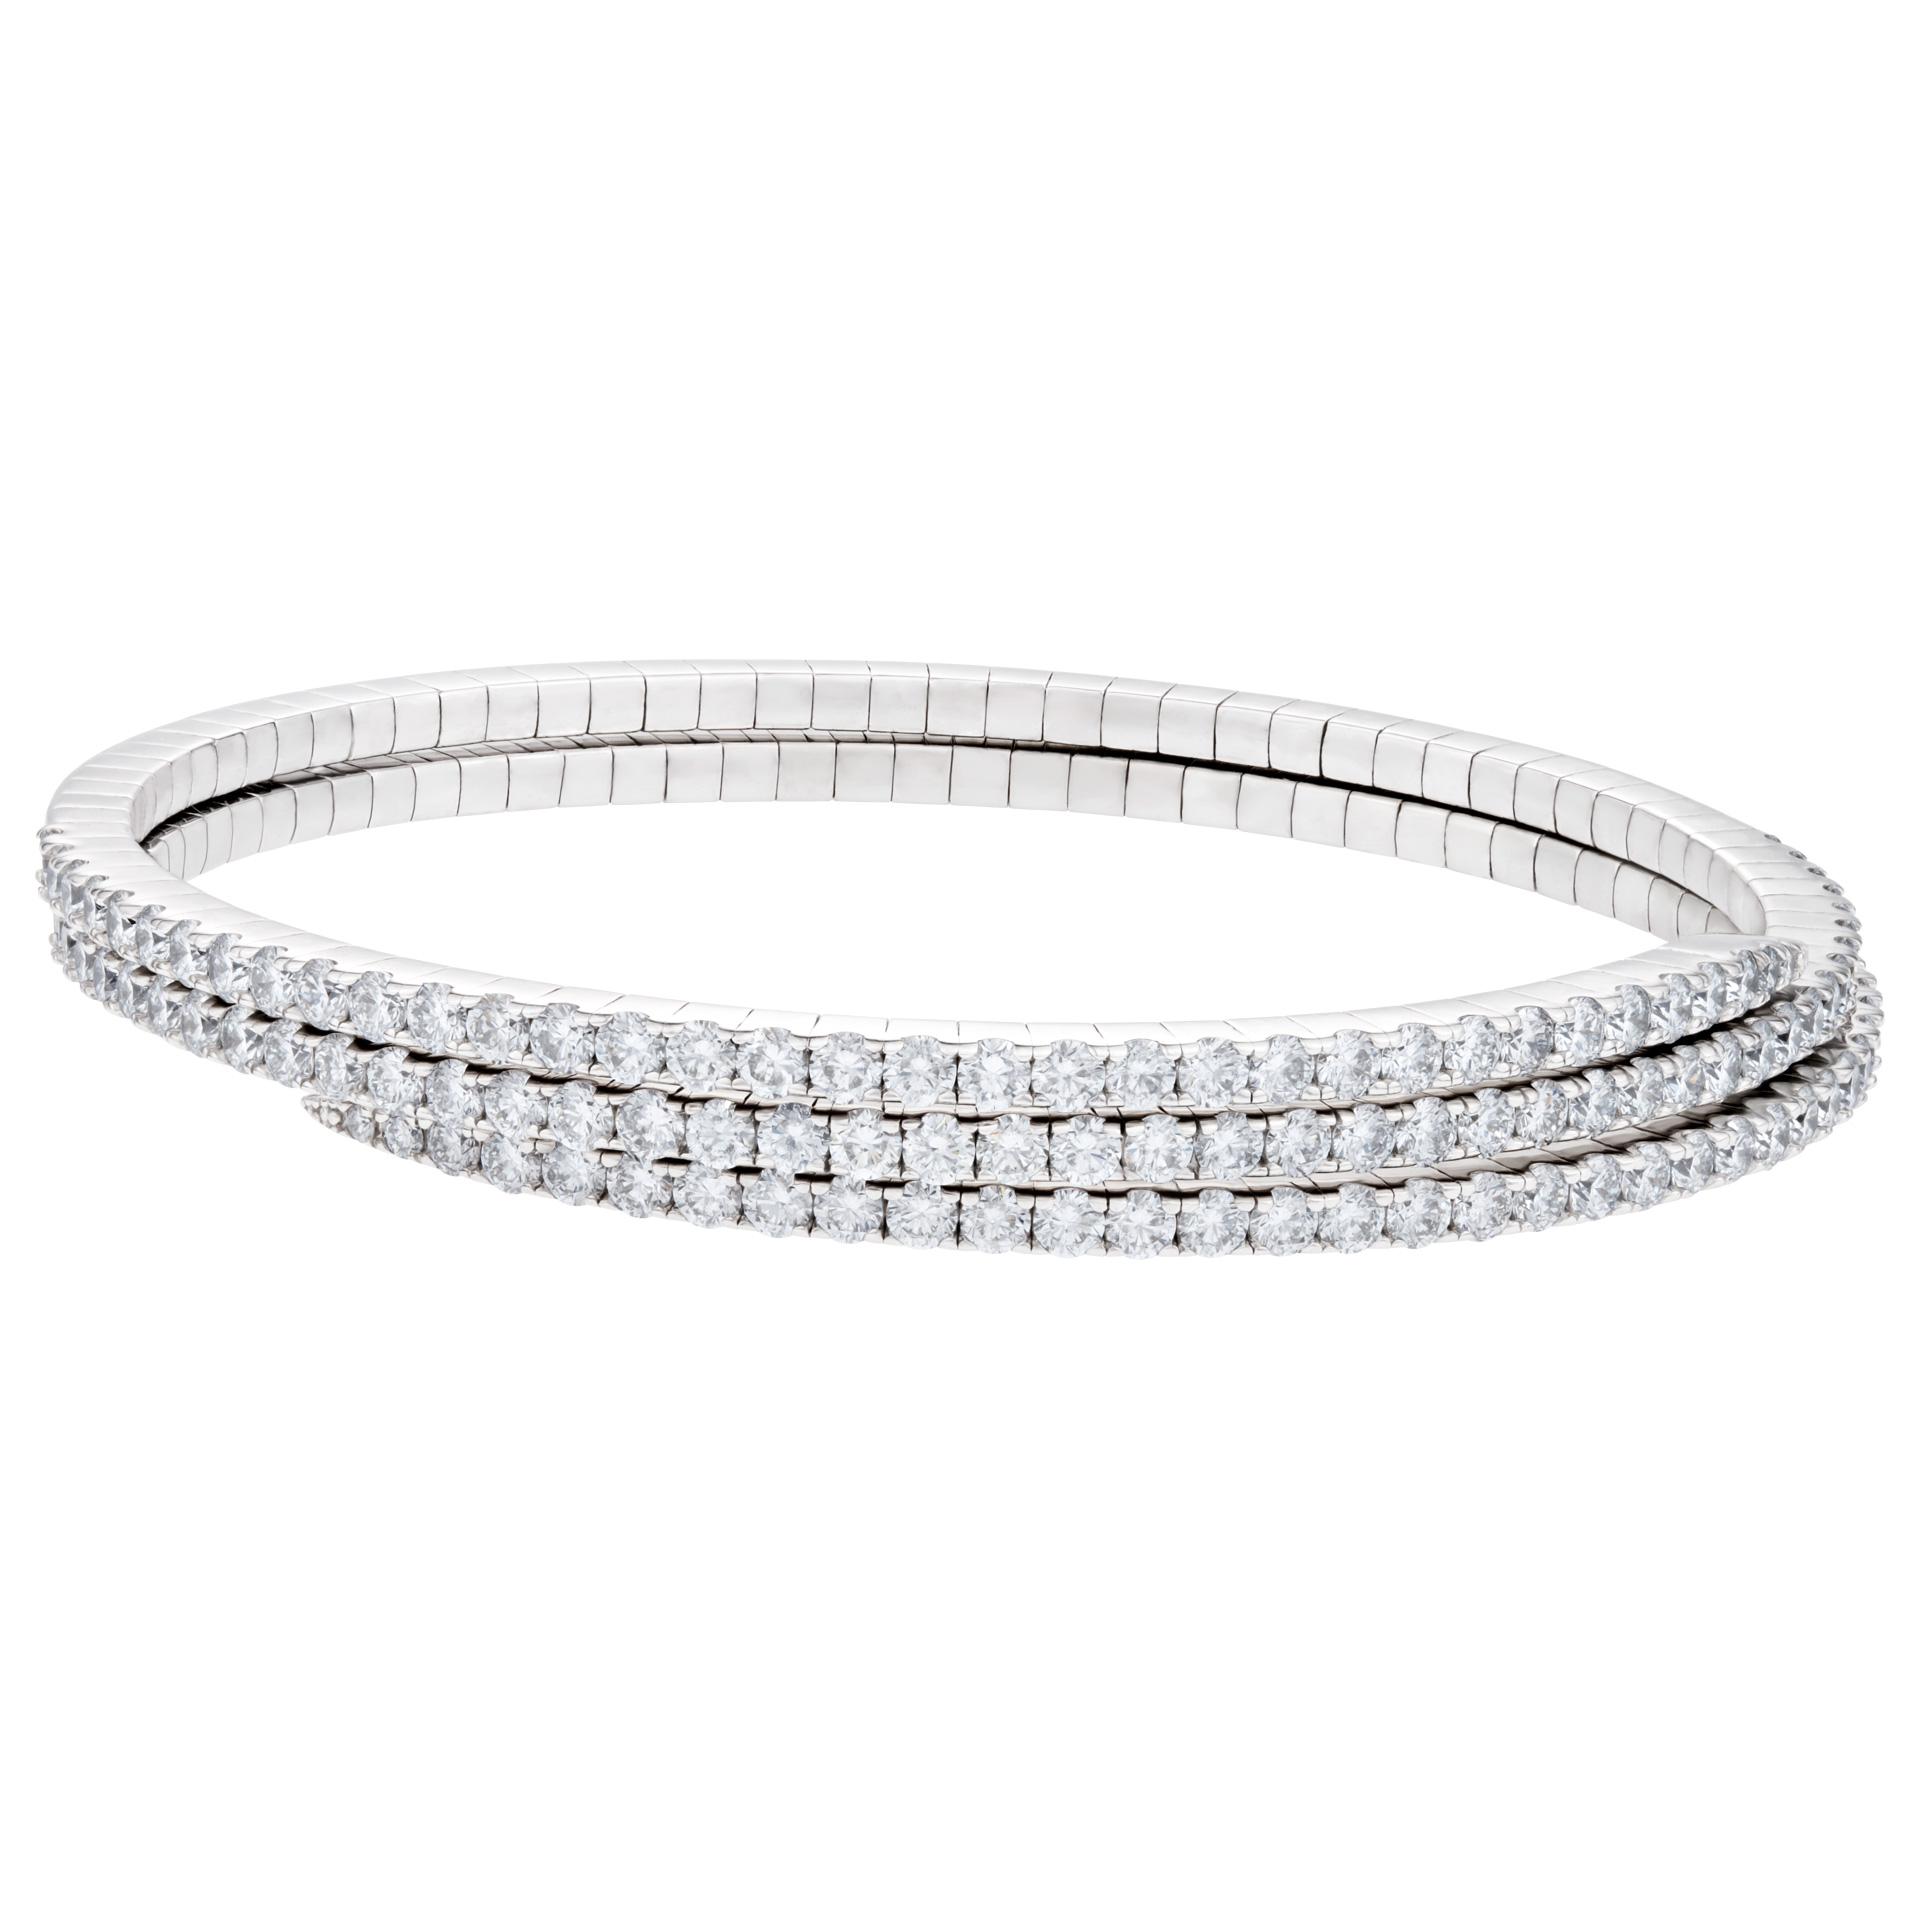 Flexible diamond coil bangle in 18k white gold. 7.32 carats in round diamonds.